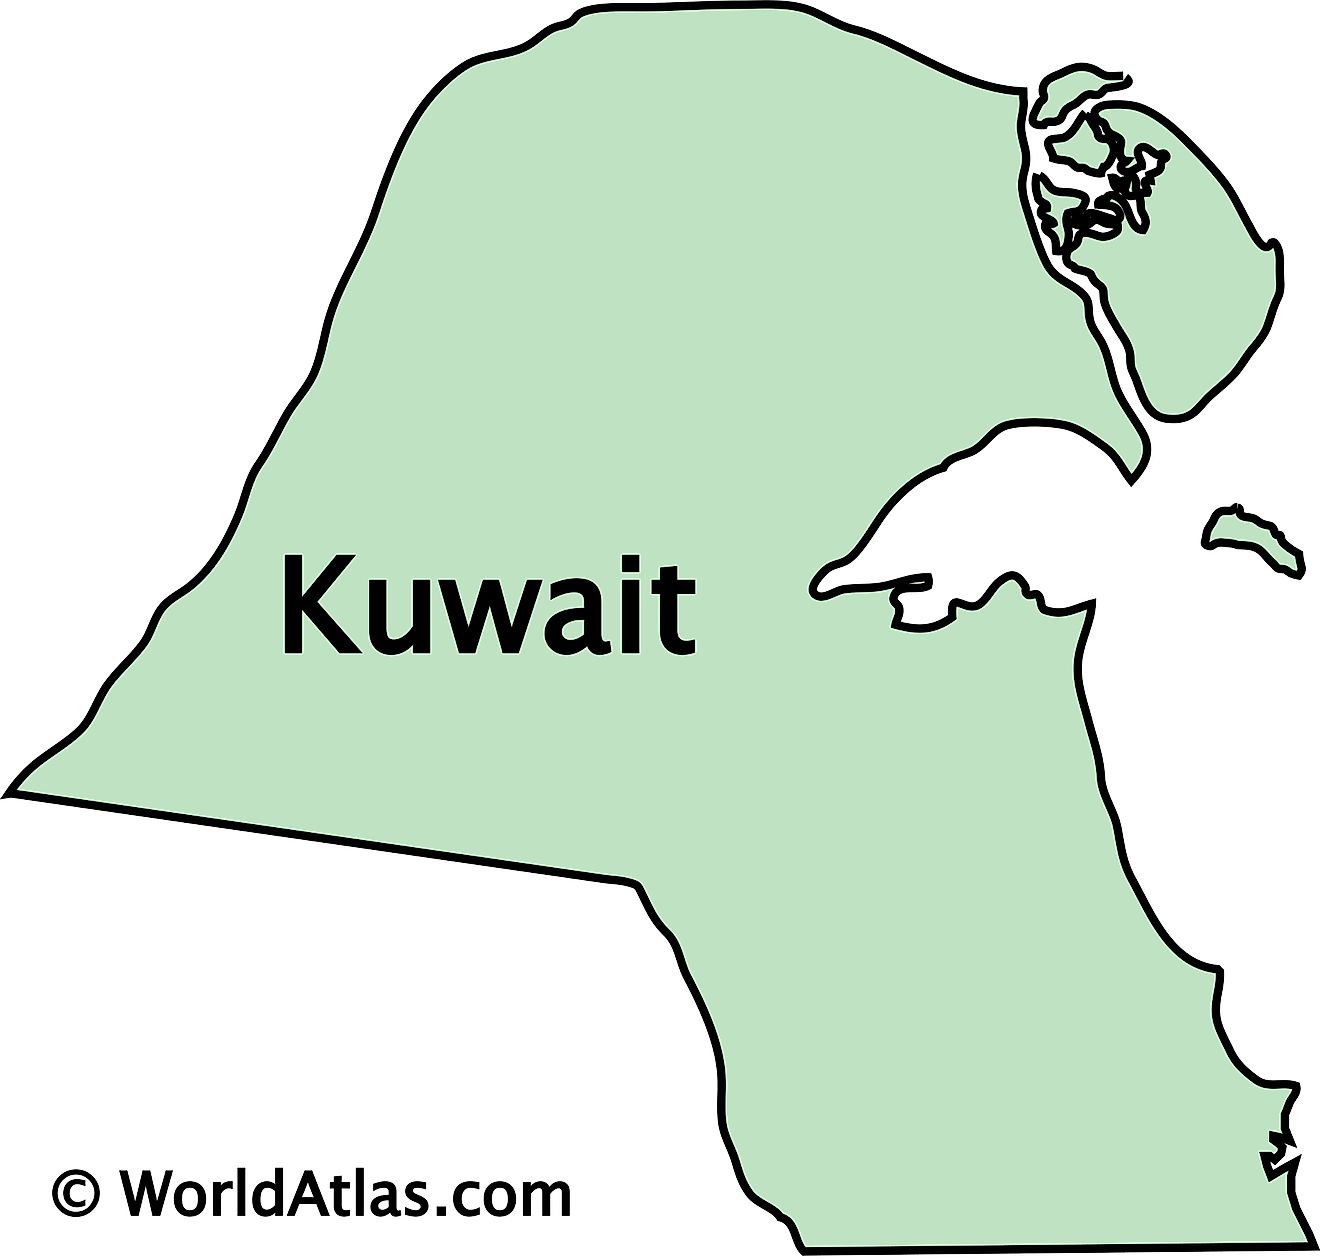 Kuwait Maps & Facts - World Atlas